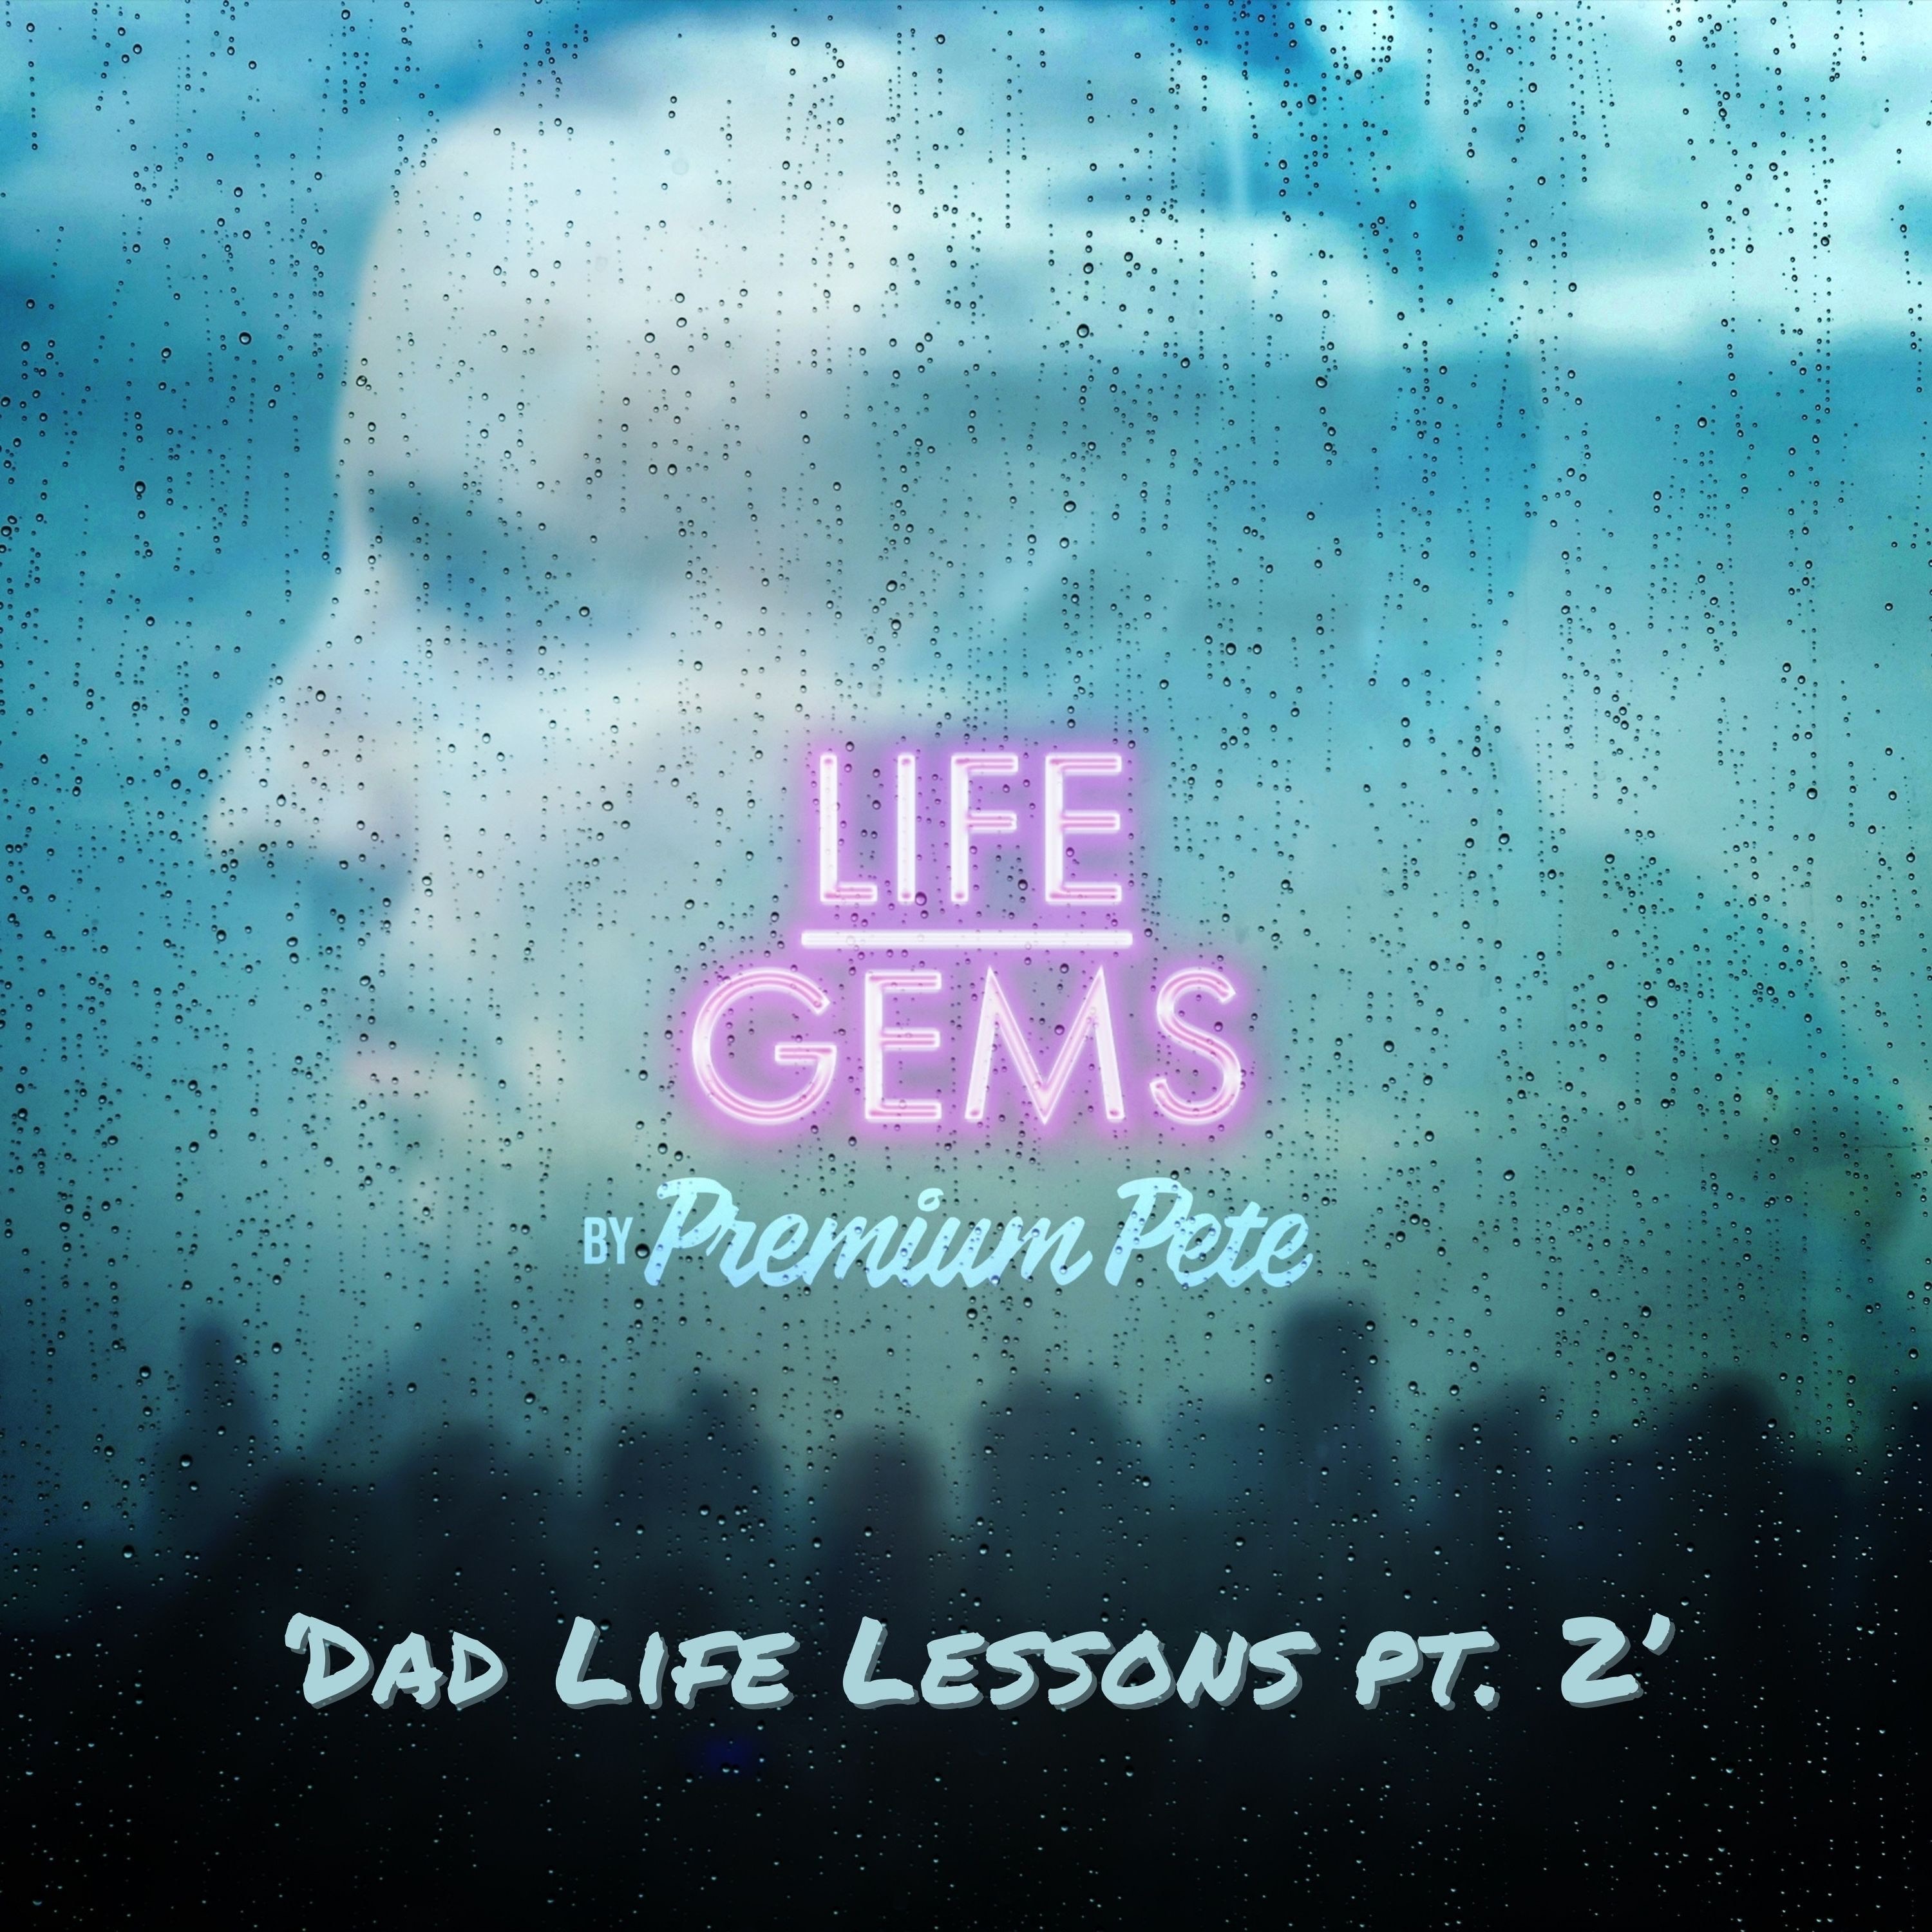 Life Gems ”Dad Life Lessons Pt 2”